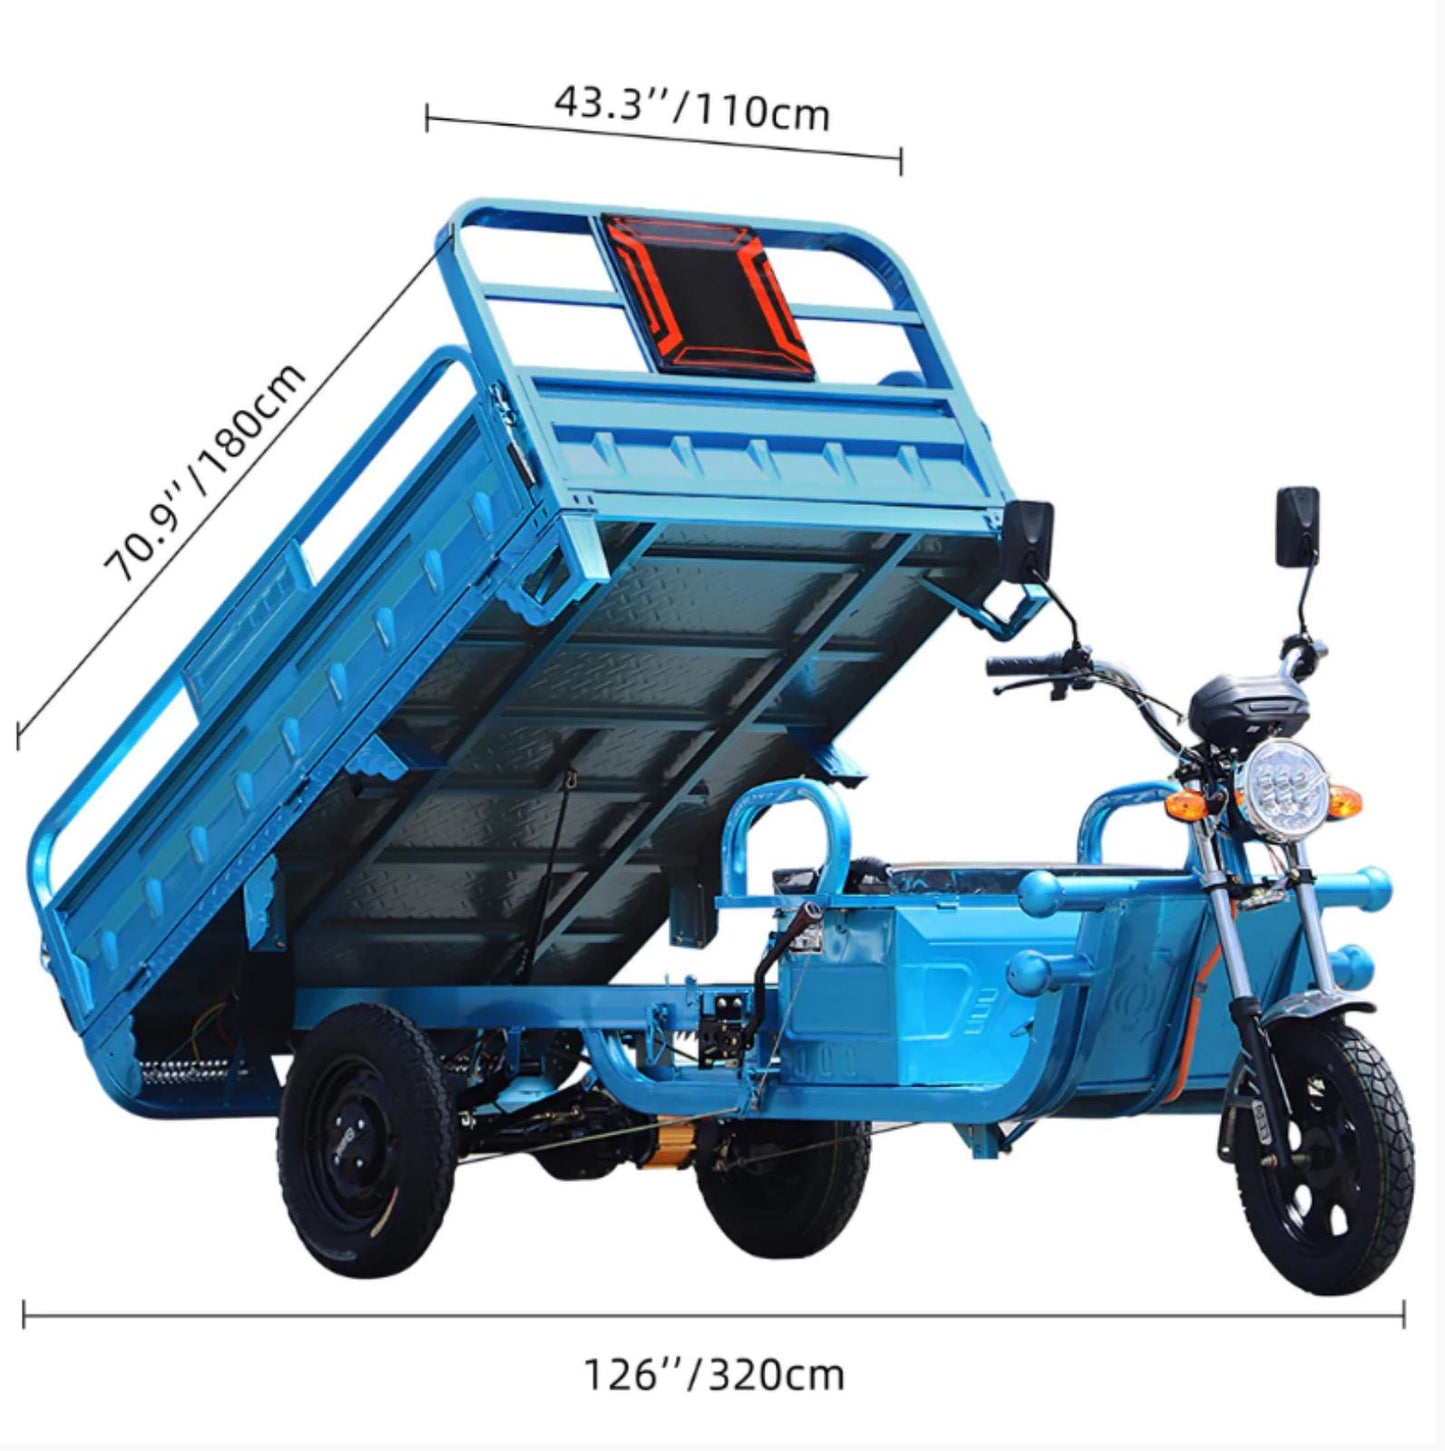 1000W Motor 60V 45Ah Lead Acid Battery Electric Cargo Tricycle 1.8*1.1 Meter